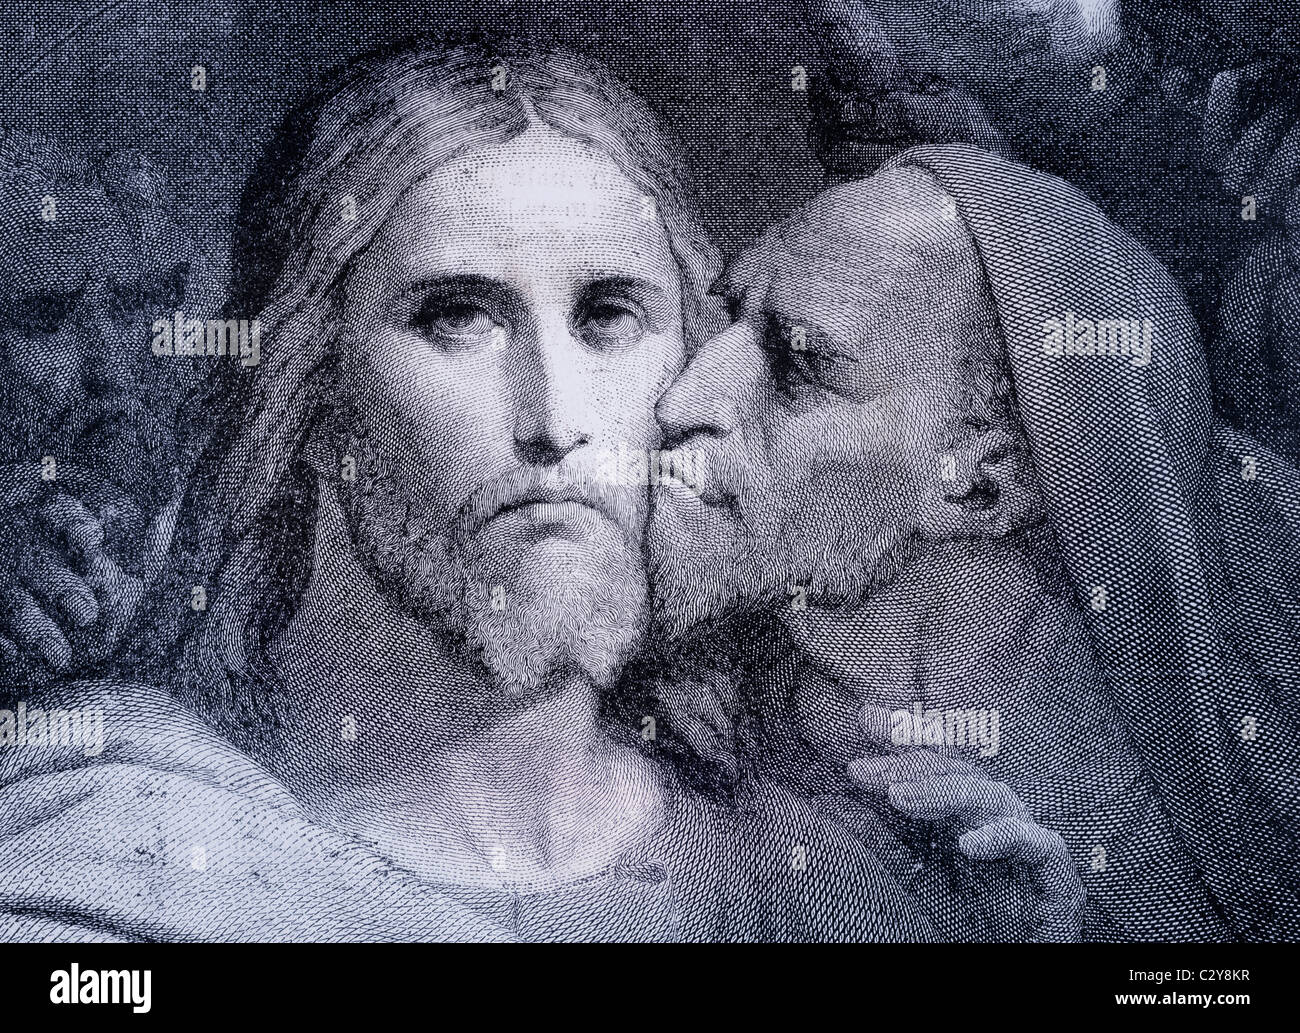 Image result for Judas Iscariot jesus christ